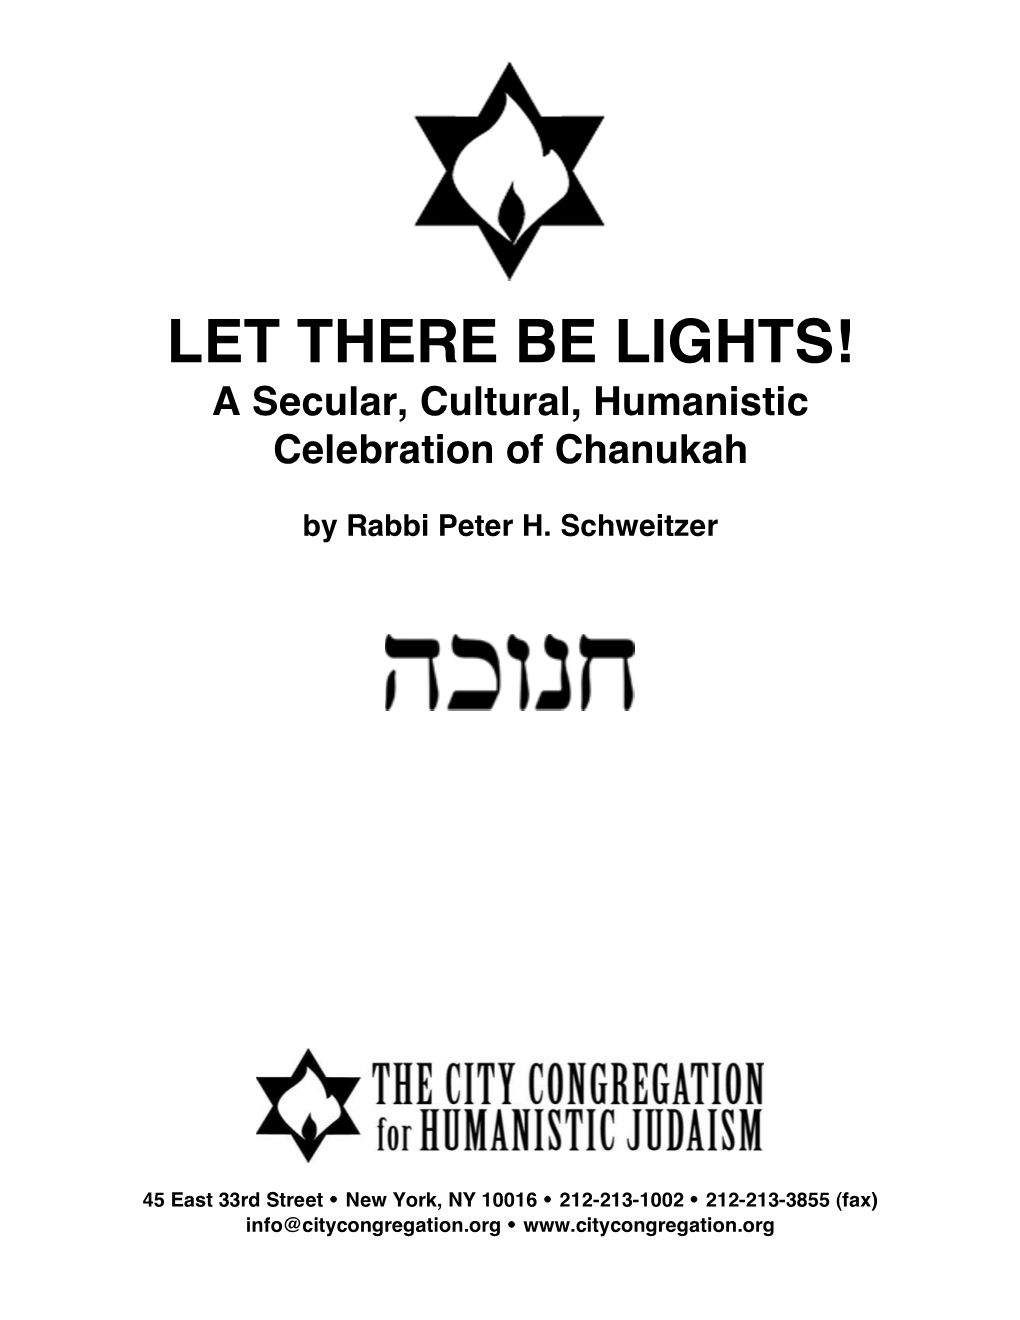 A Secular, Cultural, Humanistic Celebration of Chanukah